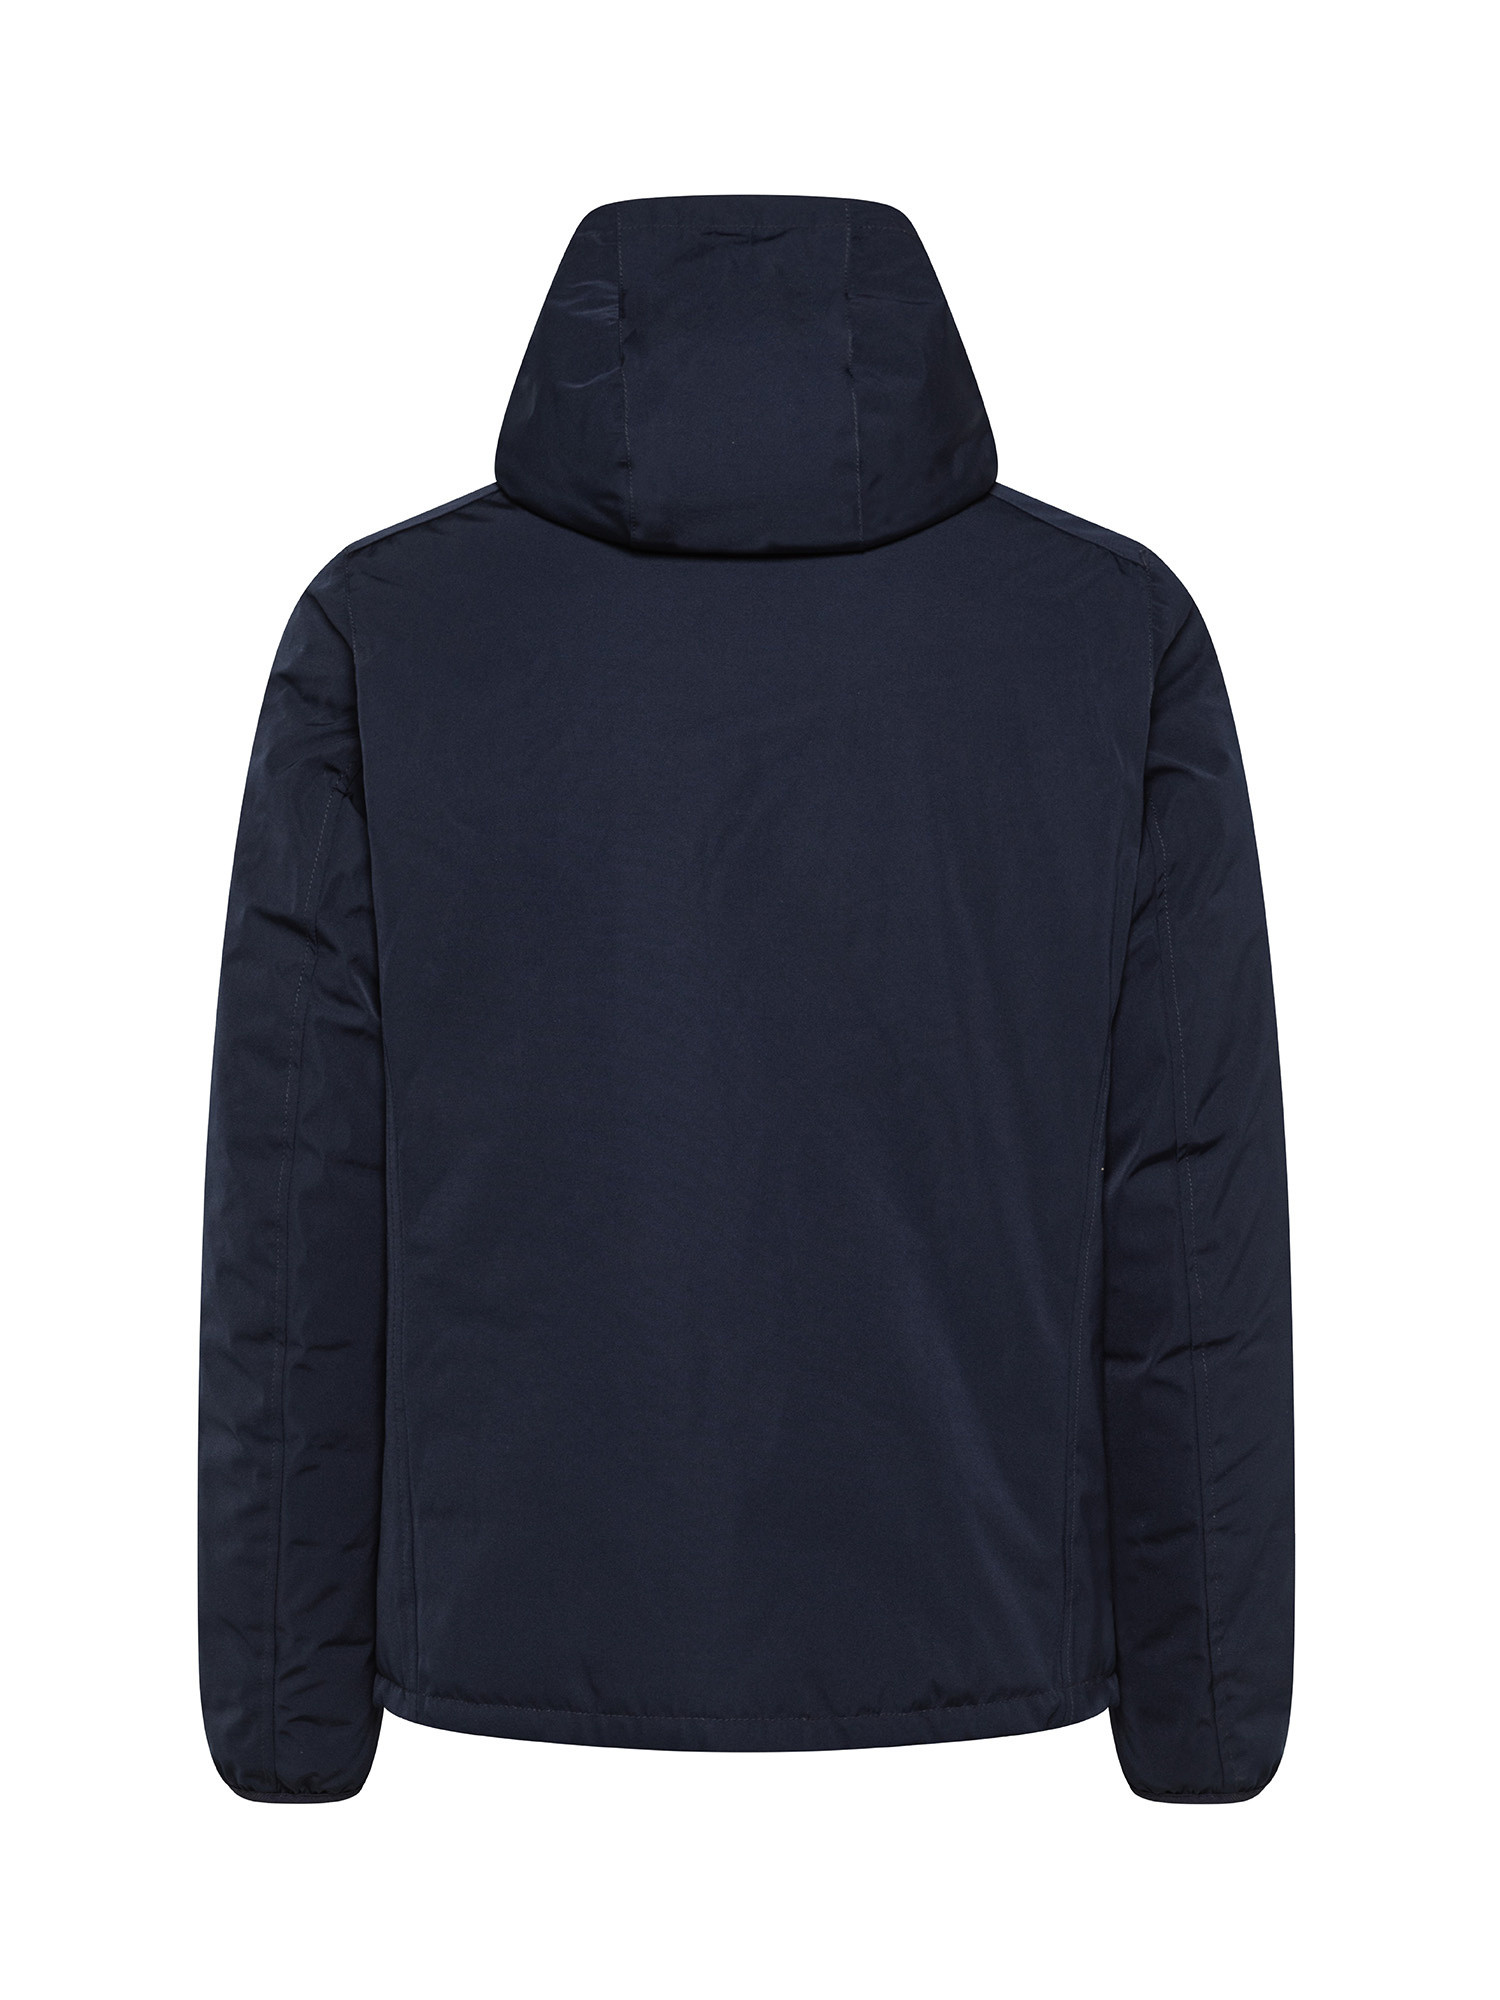 Ciesse Piumini - Reversible down jacket with hood, Dark Blue, large image number 1